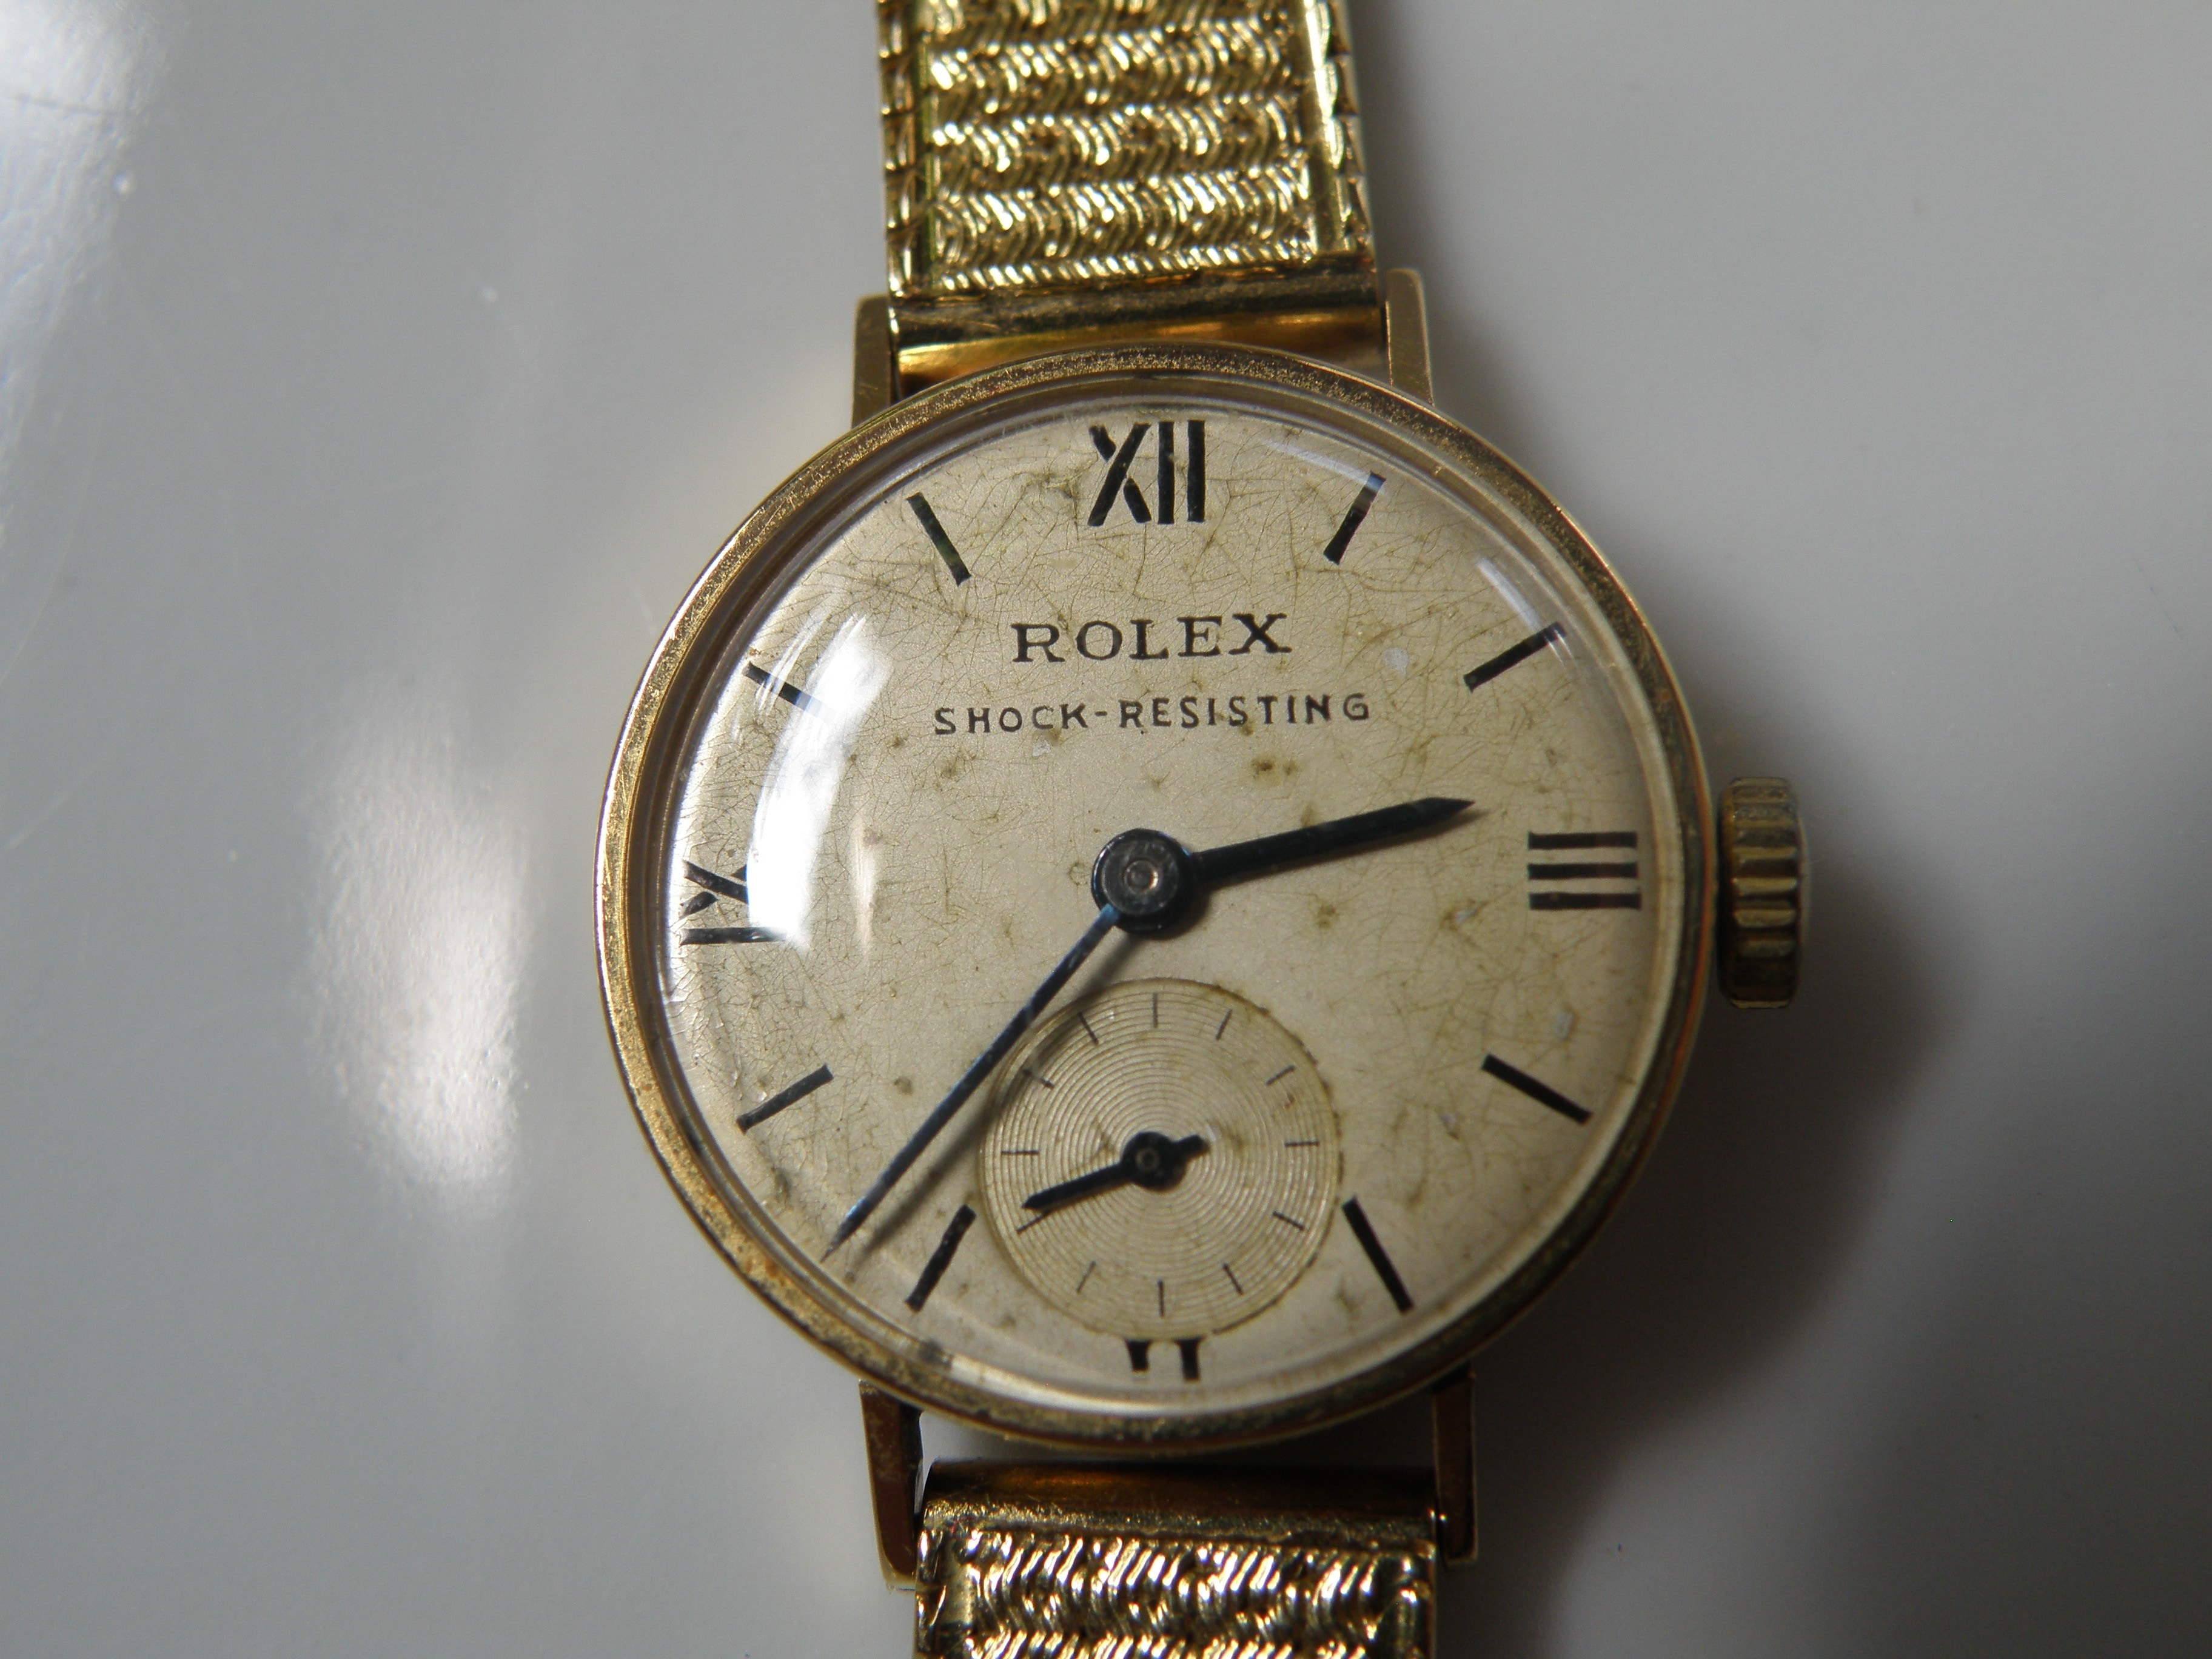 round Rolex analog watch with gold link bracelet